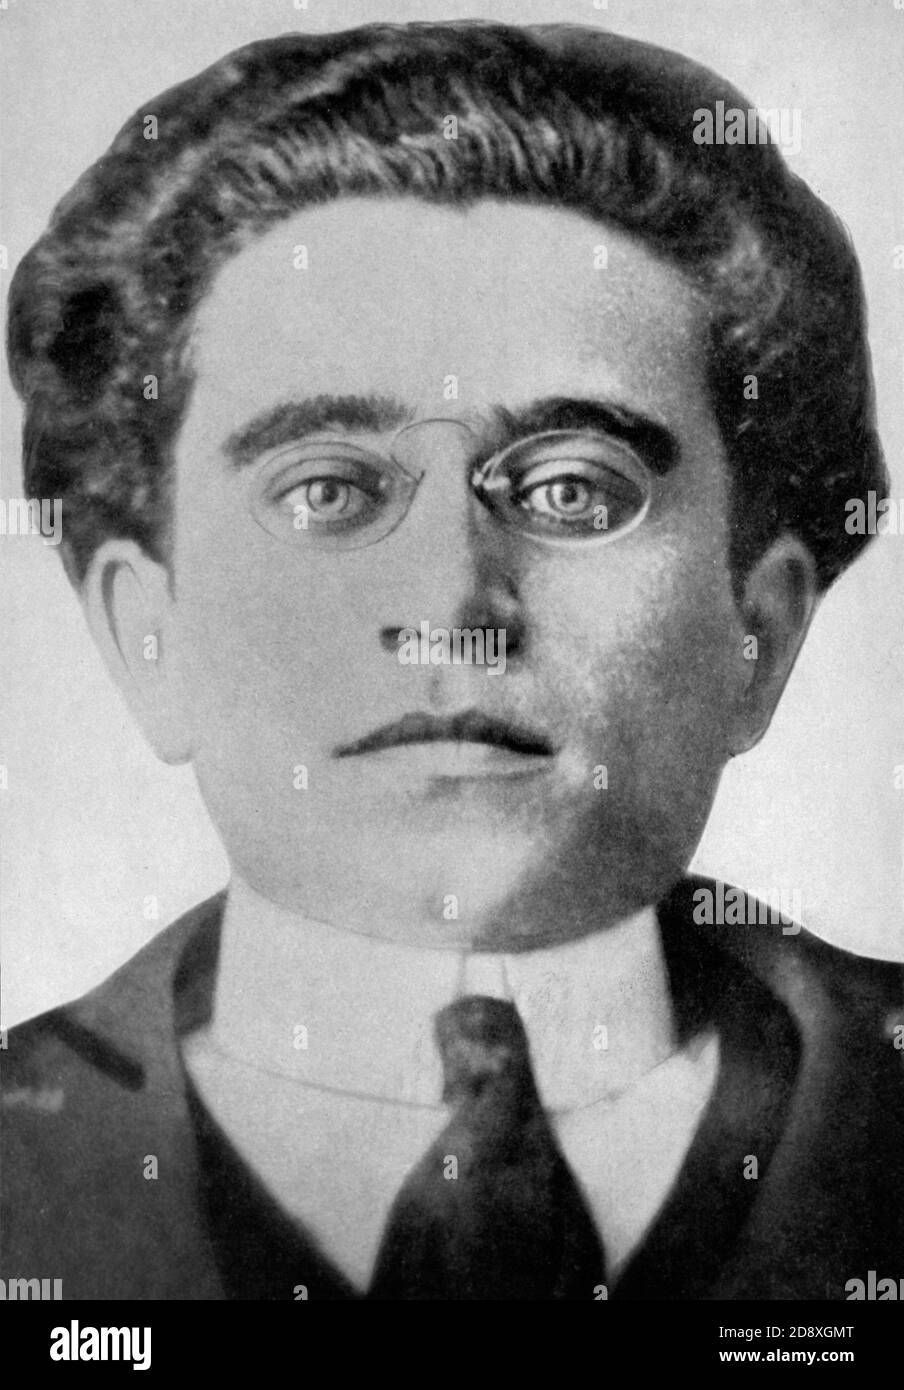 ANTONIO GRAMSCI ( Ales , Oristano 1891 - Roma 1937 ) italienischer Intellektueller, Schriftsteller und Kommunist - PARTITO COMUNISTA ITALIANO - PCI - POLITICO - POLITIKER - POLITIK - POLITIK - Objektiv - occhiali da vista - Kragen - colletto - Krawatte - cravatta ---- Archivio GBB Stockfoto